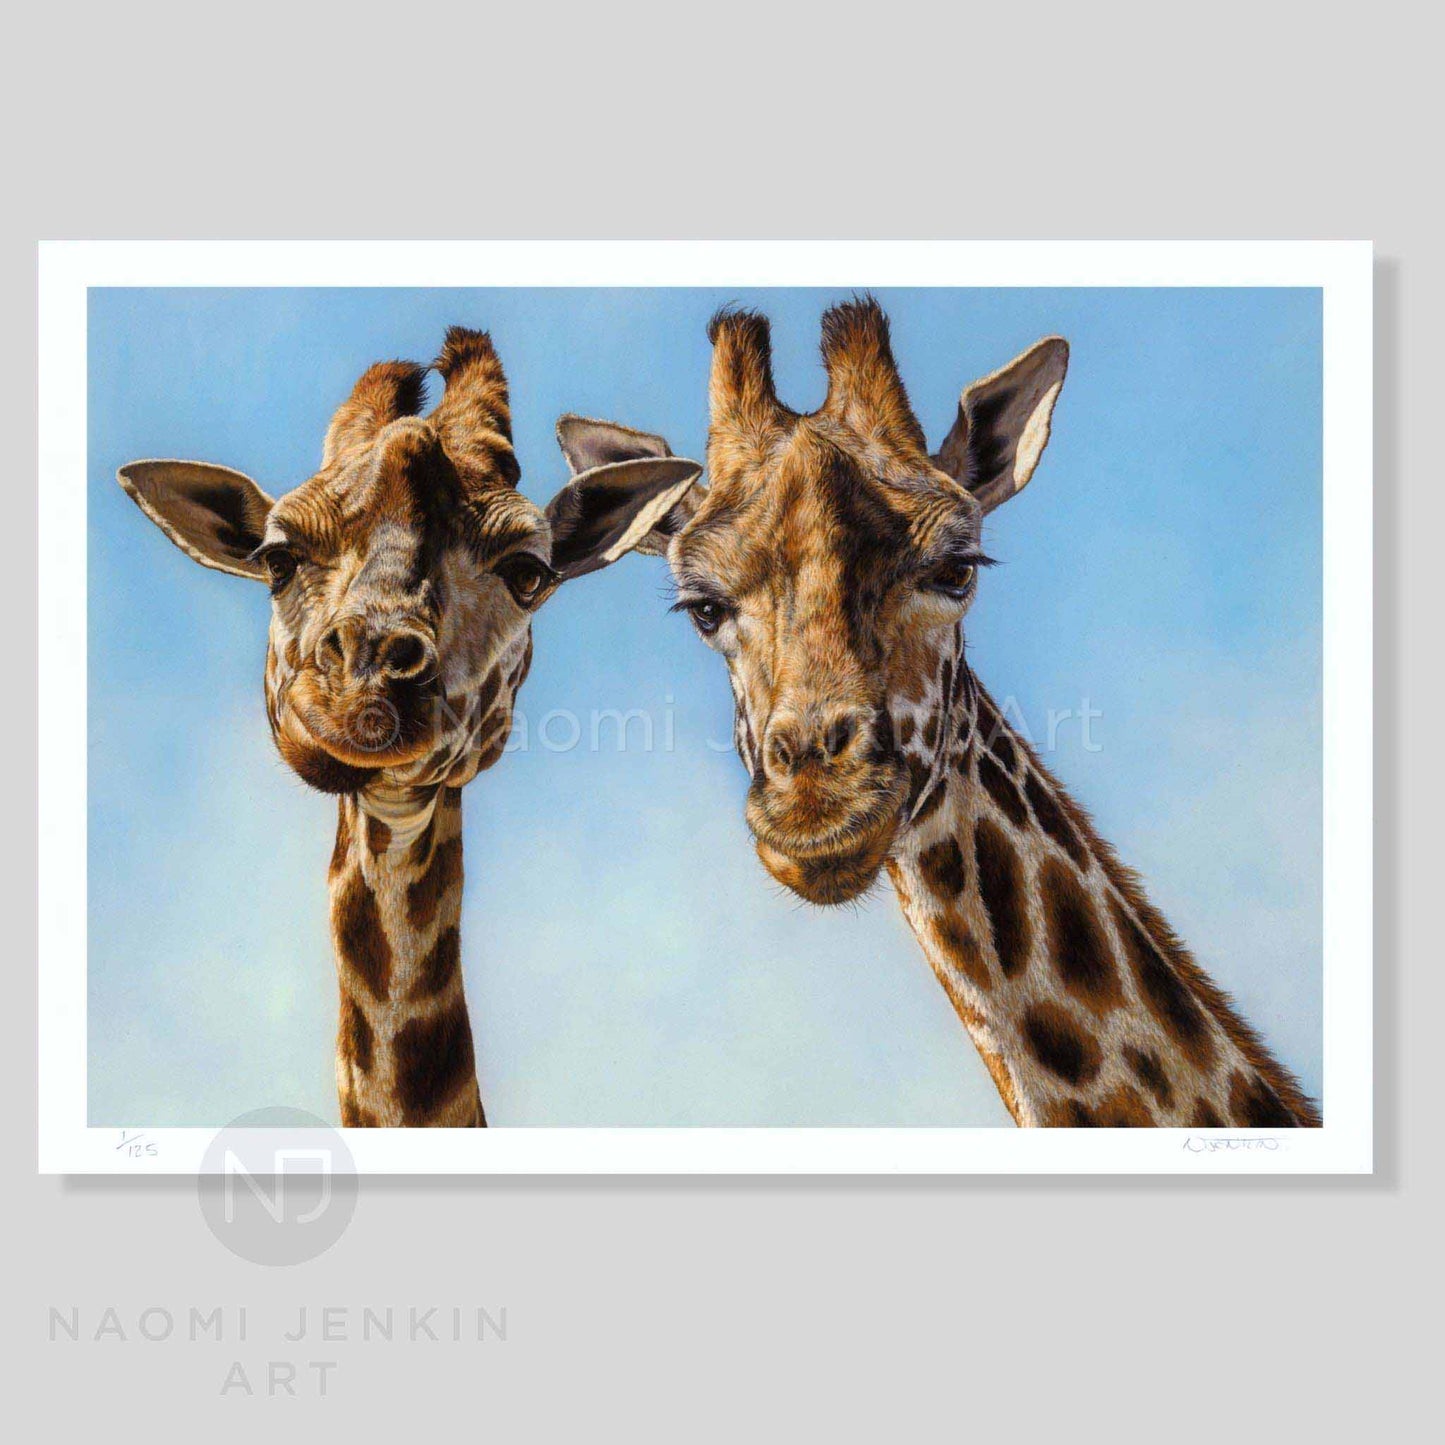 Giraffe art print by wildlife artist Naomi Jenkin. 